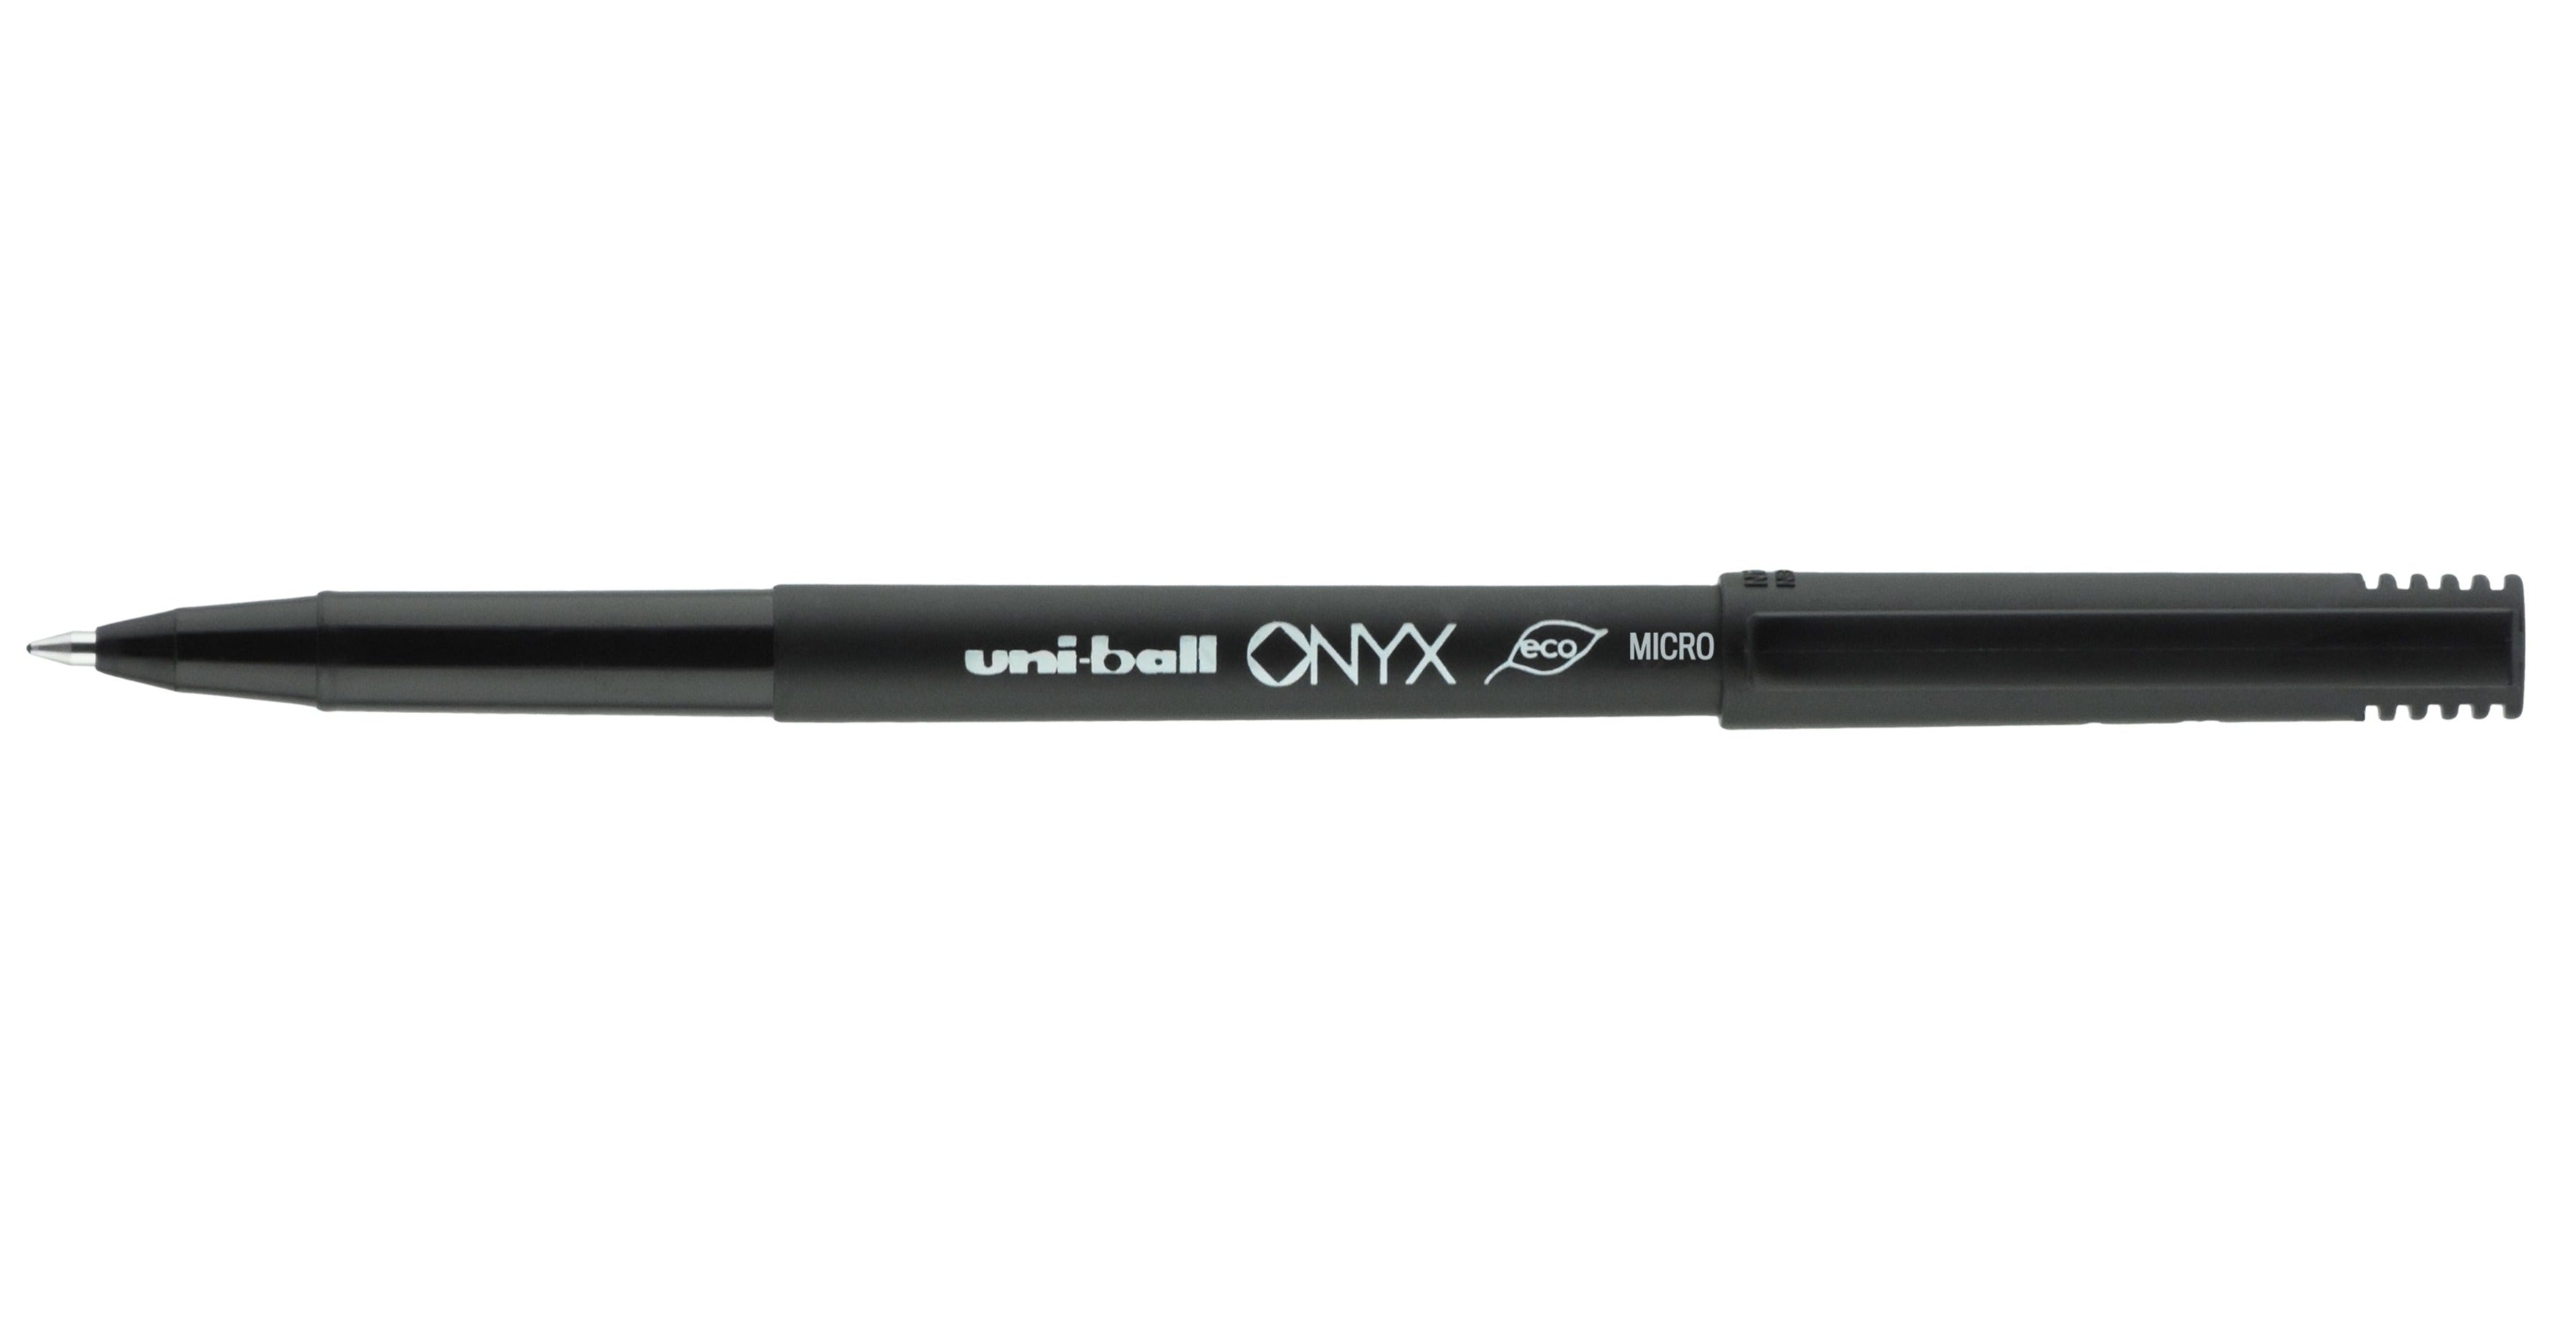 Onyx, Rollerball Pens